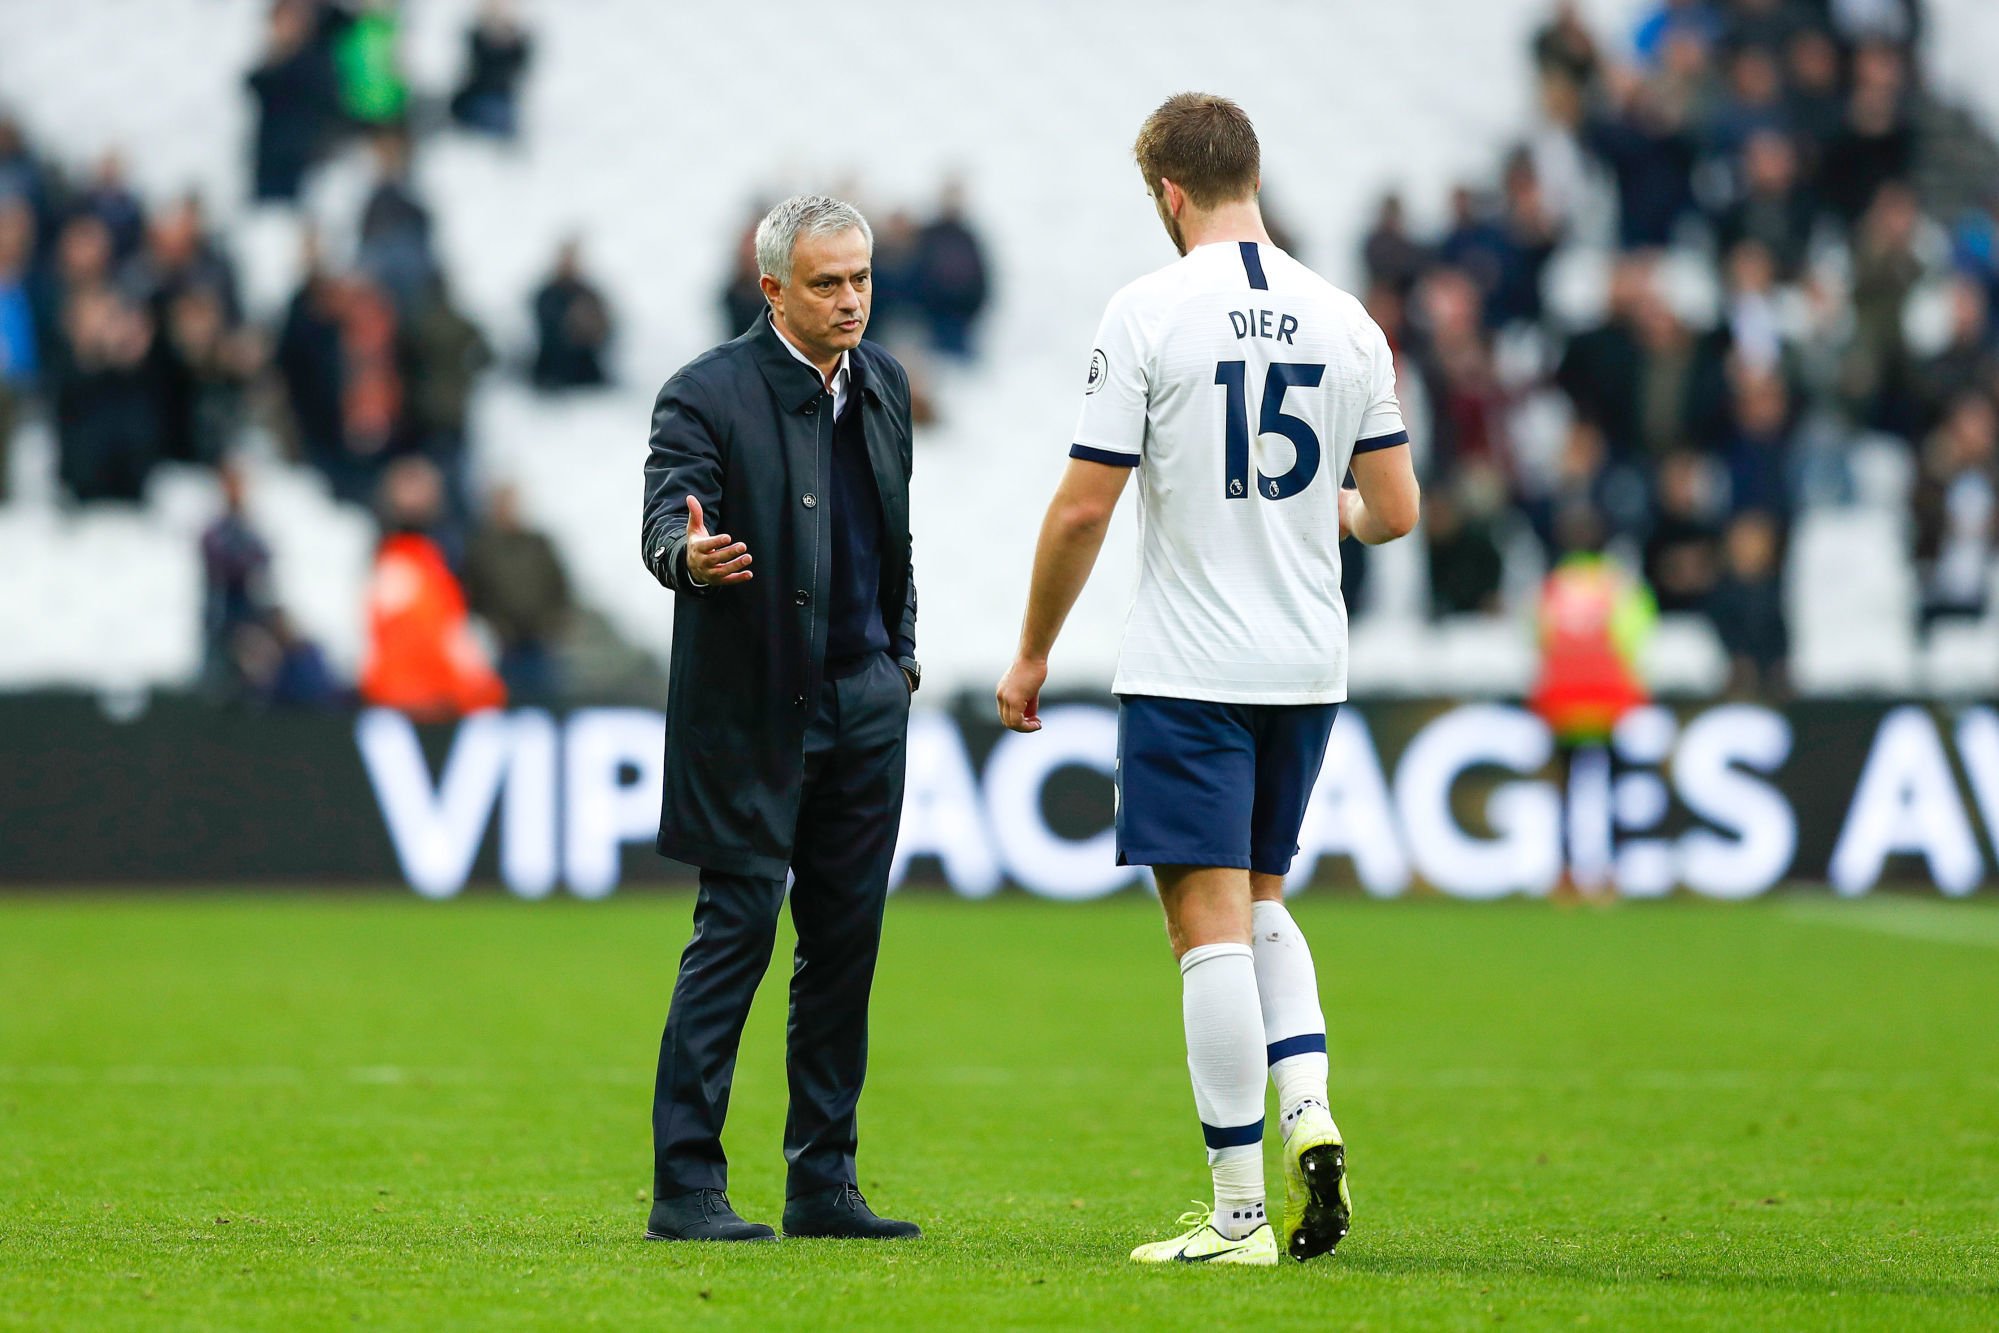 Jose Mourinho et Eric Dier - Tottenham Hotspur 
Photo by Icon Sport